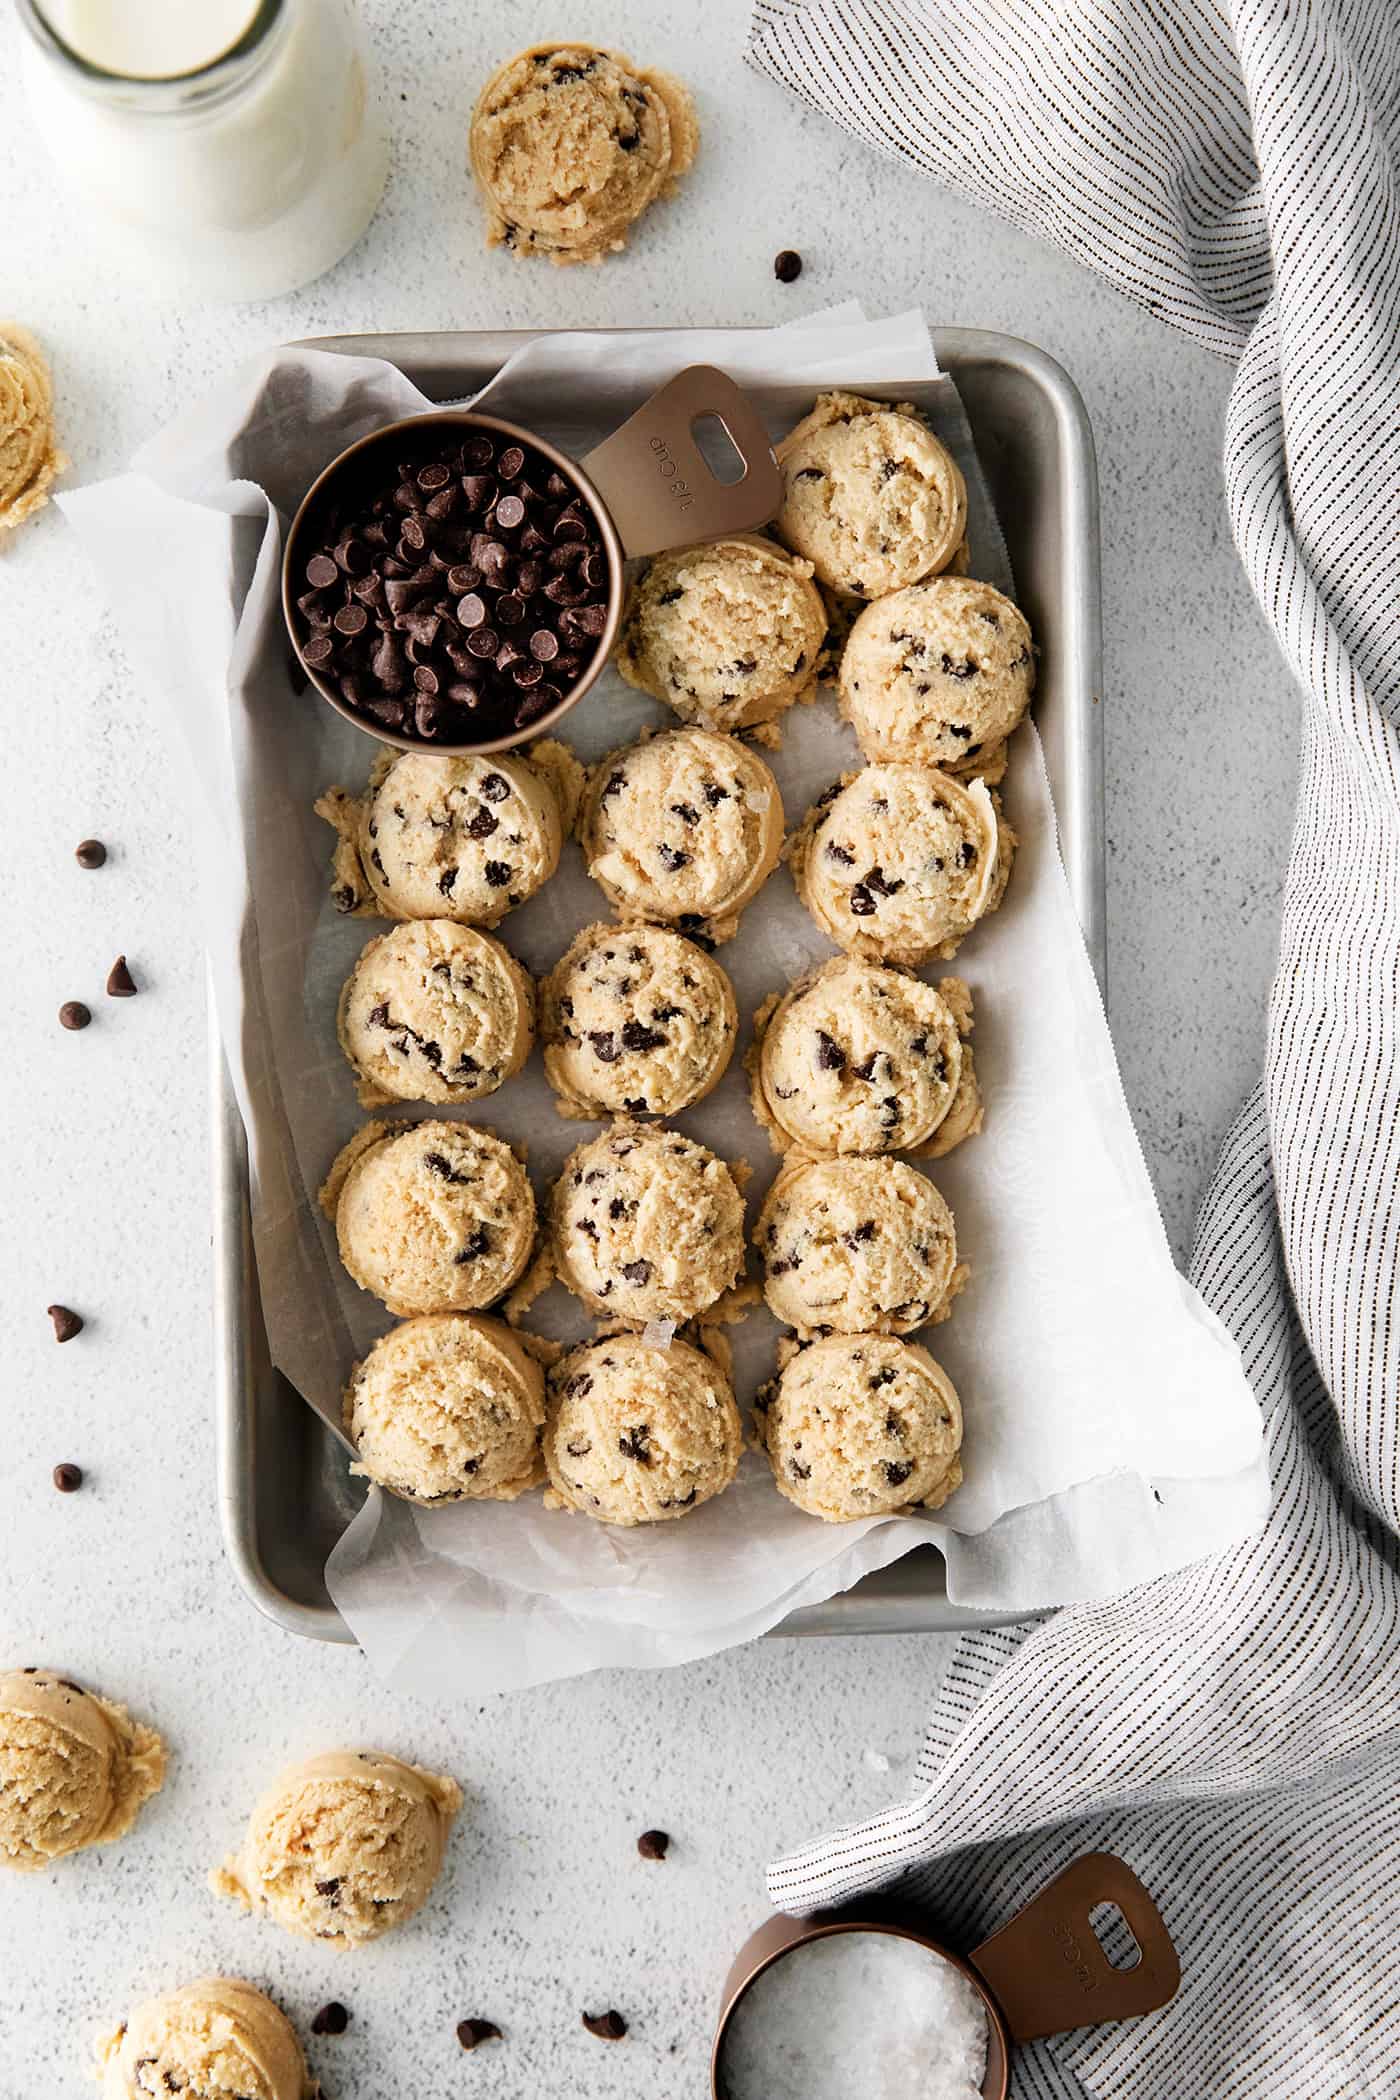 https://www.afarmgirlsdabbles.com/wp-content/uploads/2019/11/edible-cookie-dough_afarmgirlsdabbles_07.jpg